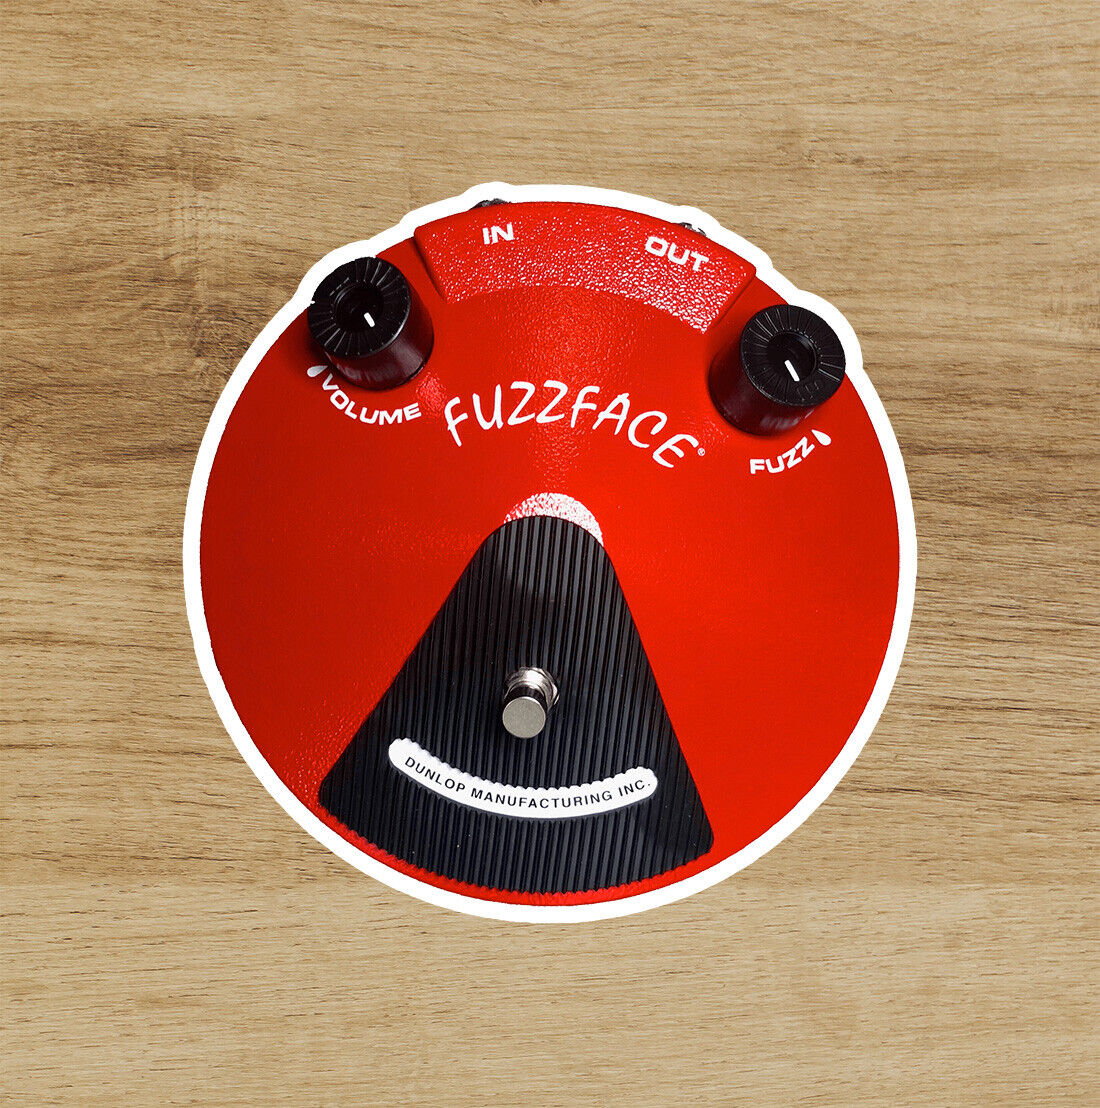 Dunlop Germanium Fuzz Face Mini Red Guitar Effects Pedal Premium Sticker 3 in